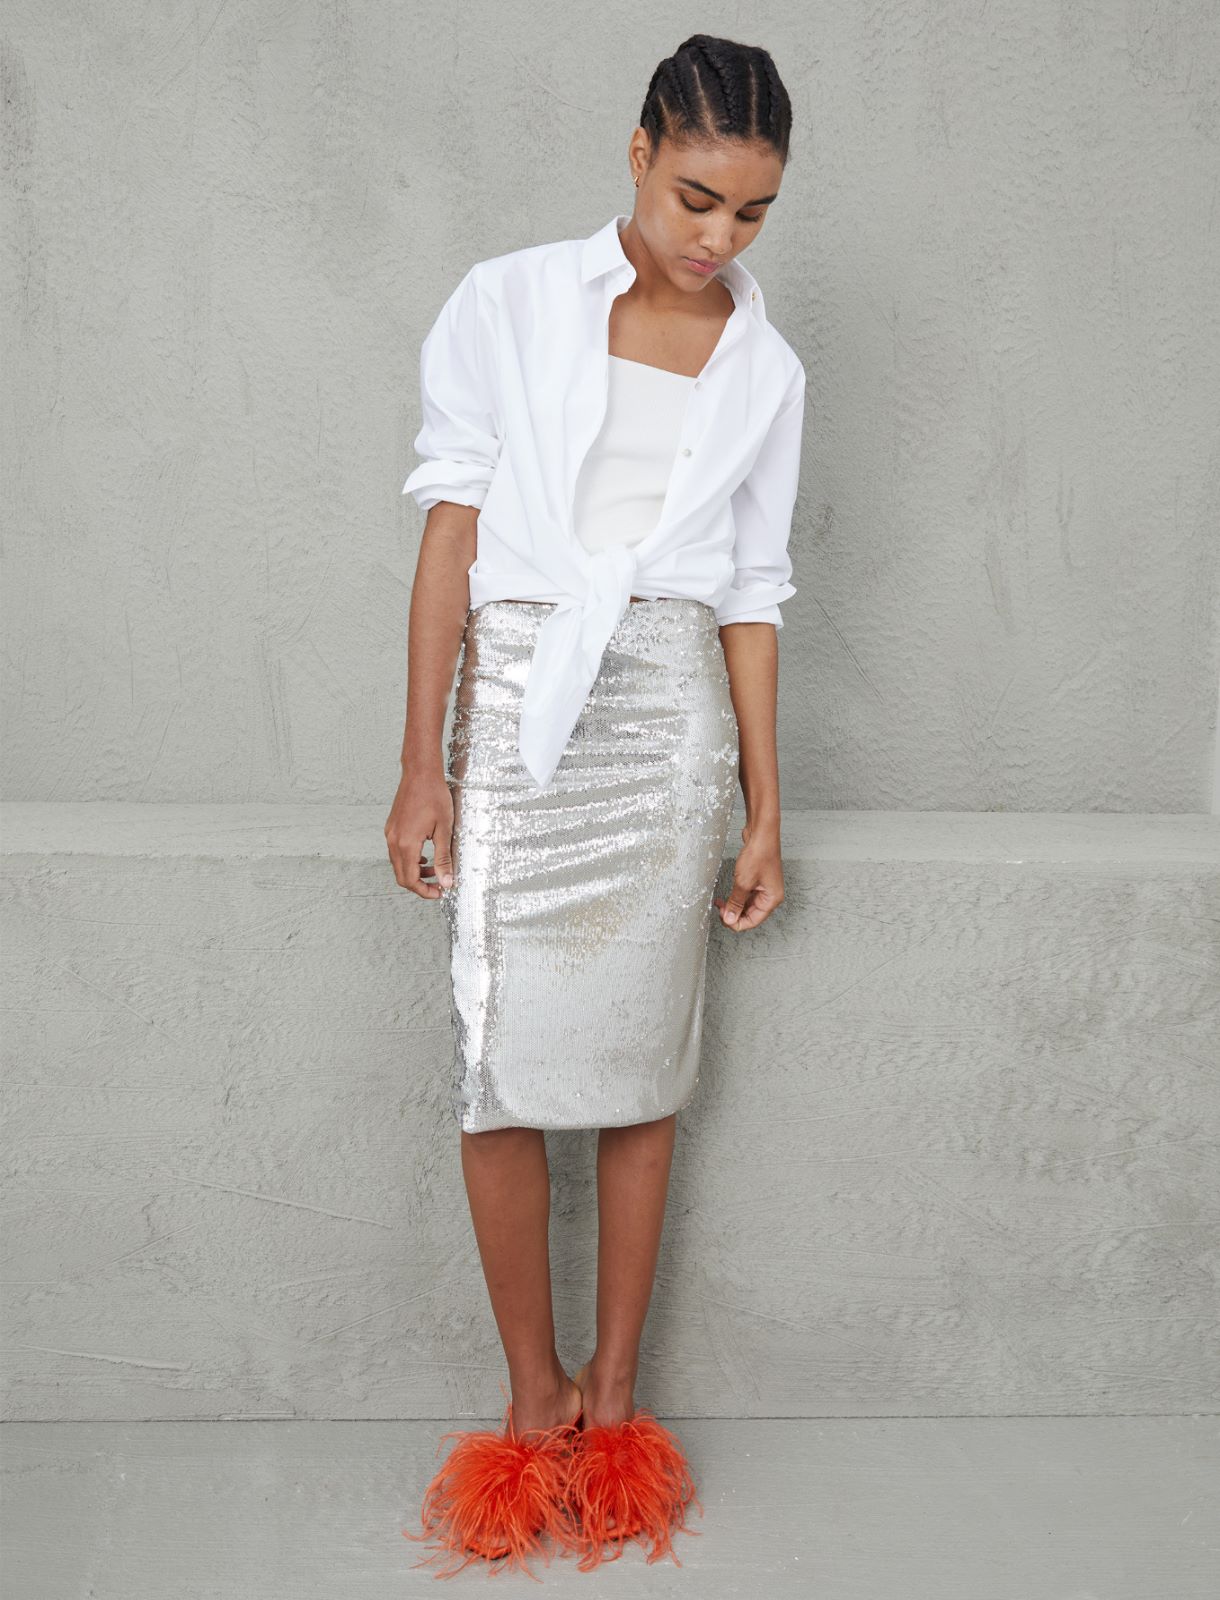 Sequin skirt - Silver - Marina Rinaldi